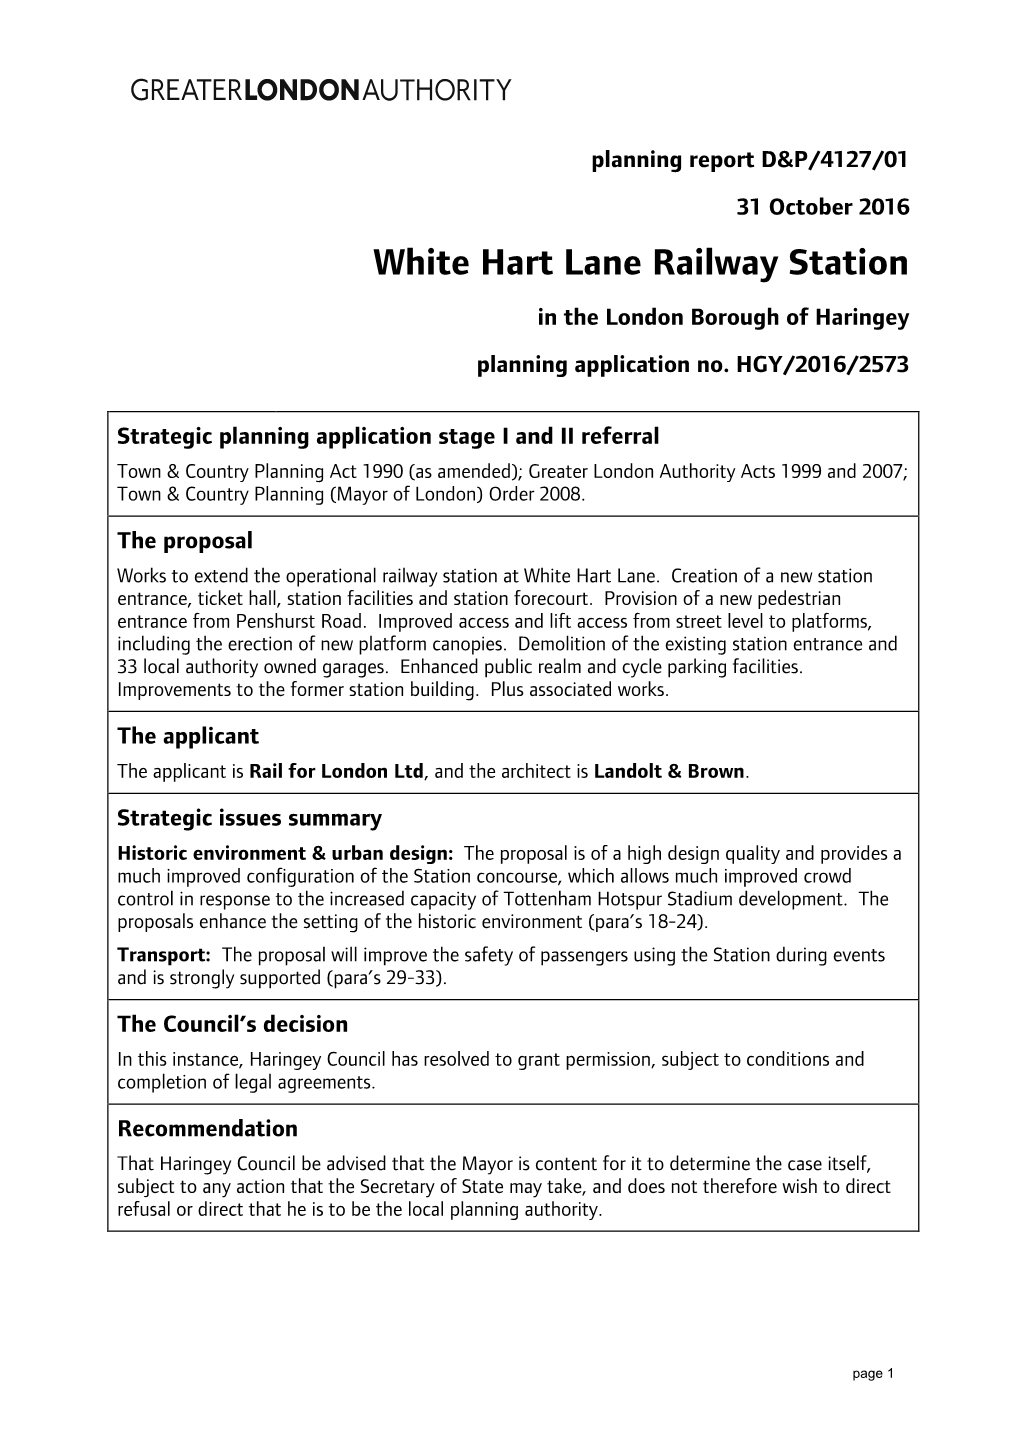 White Hart Lane Railway Station in the London Borough of Haringey Planning Application No